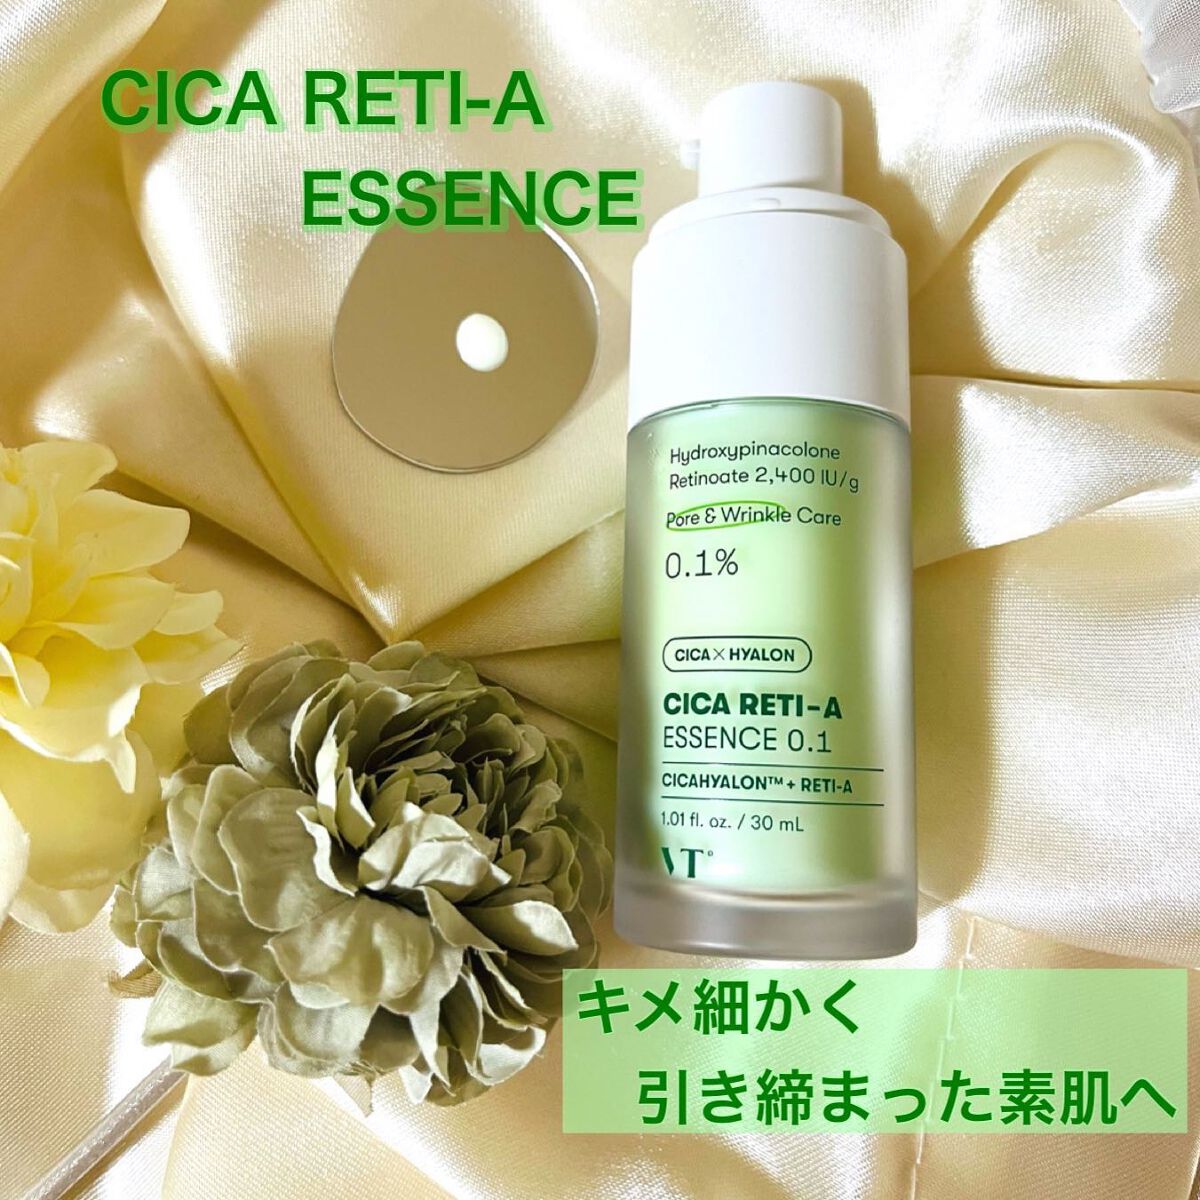 ★VT CICA RETI-A ESSENCE 0.1★シカ レチ★